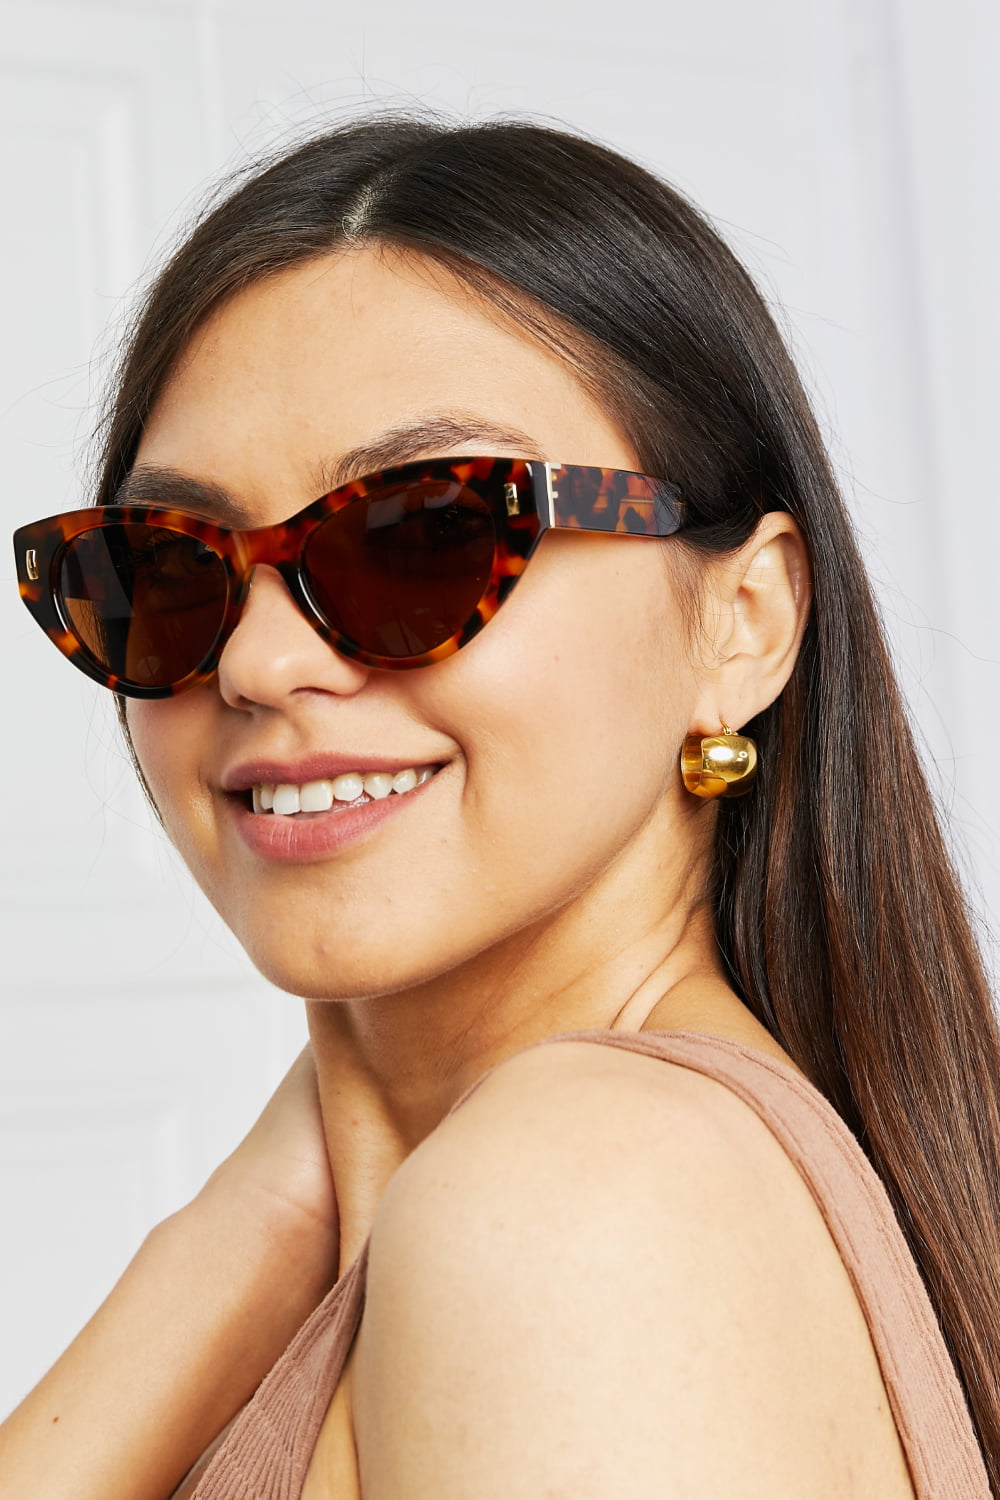 Tortoiseshell Acetate Frame Sunglasses Tangerine One Size Sunglasses by Vim&Vigor | Vim&Vigor Boutique